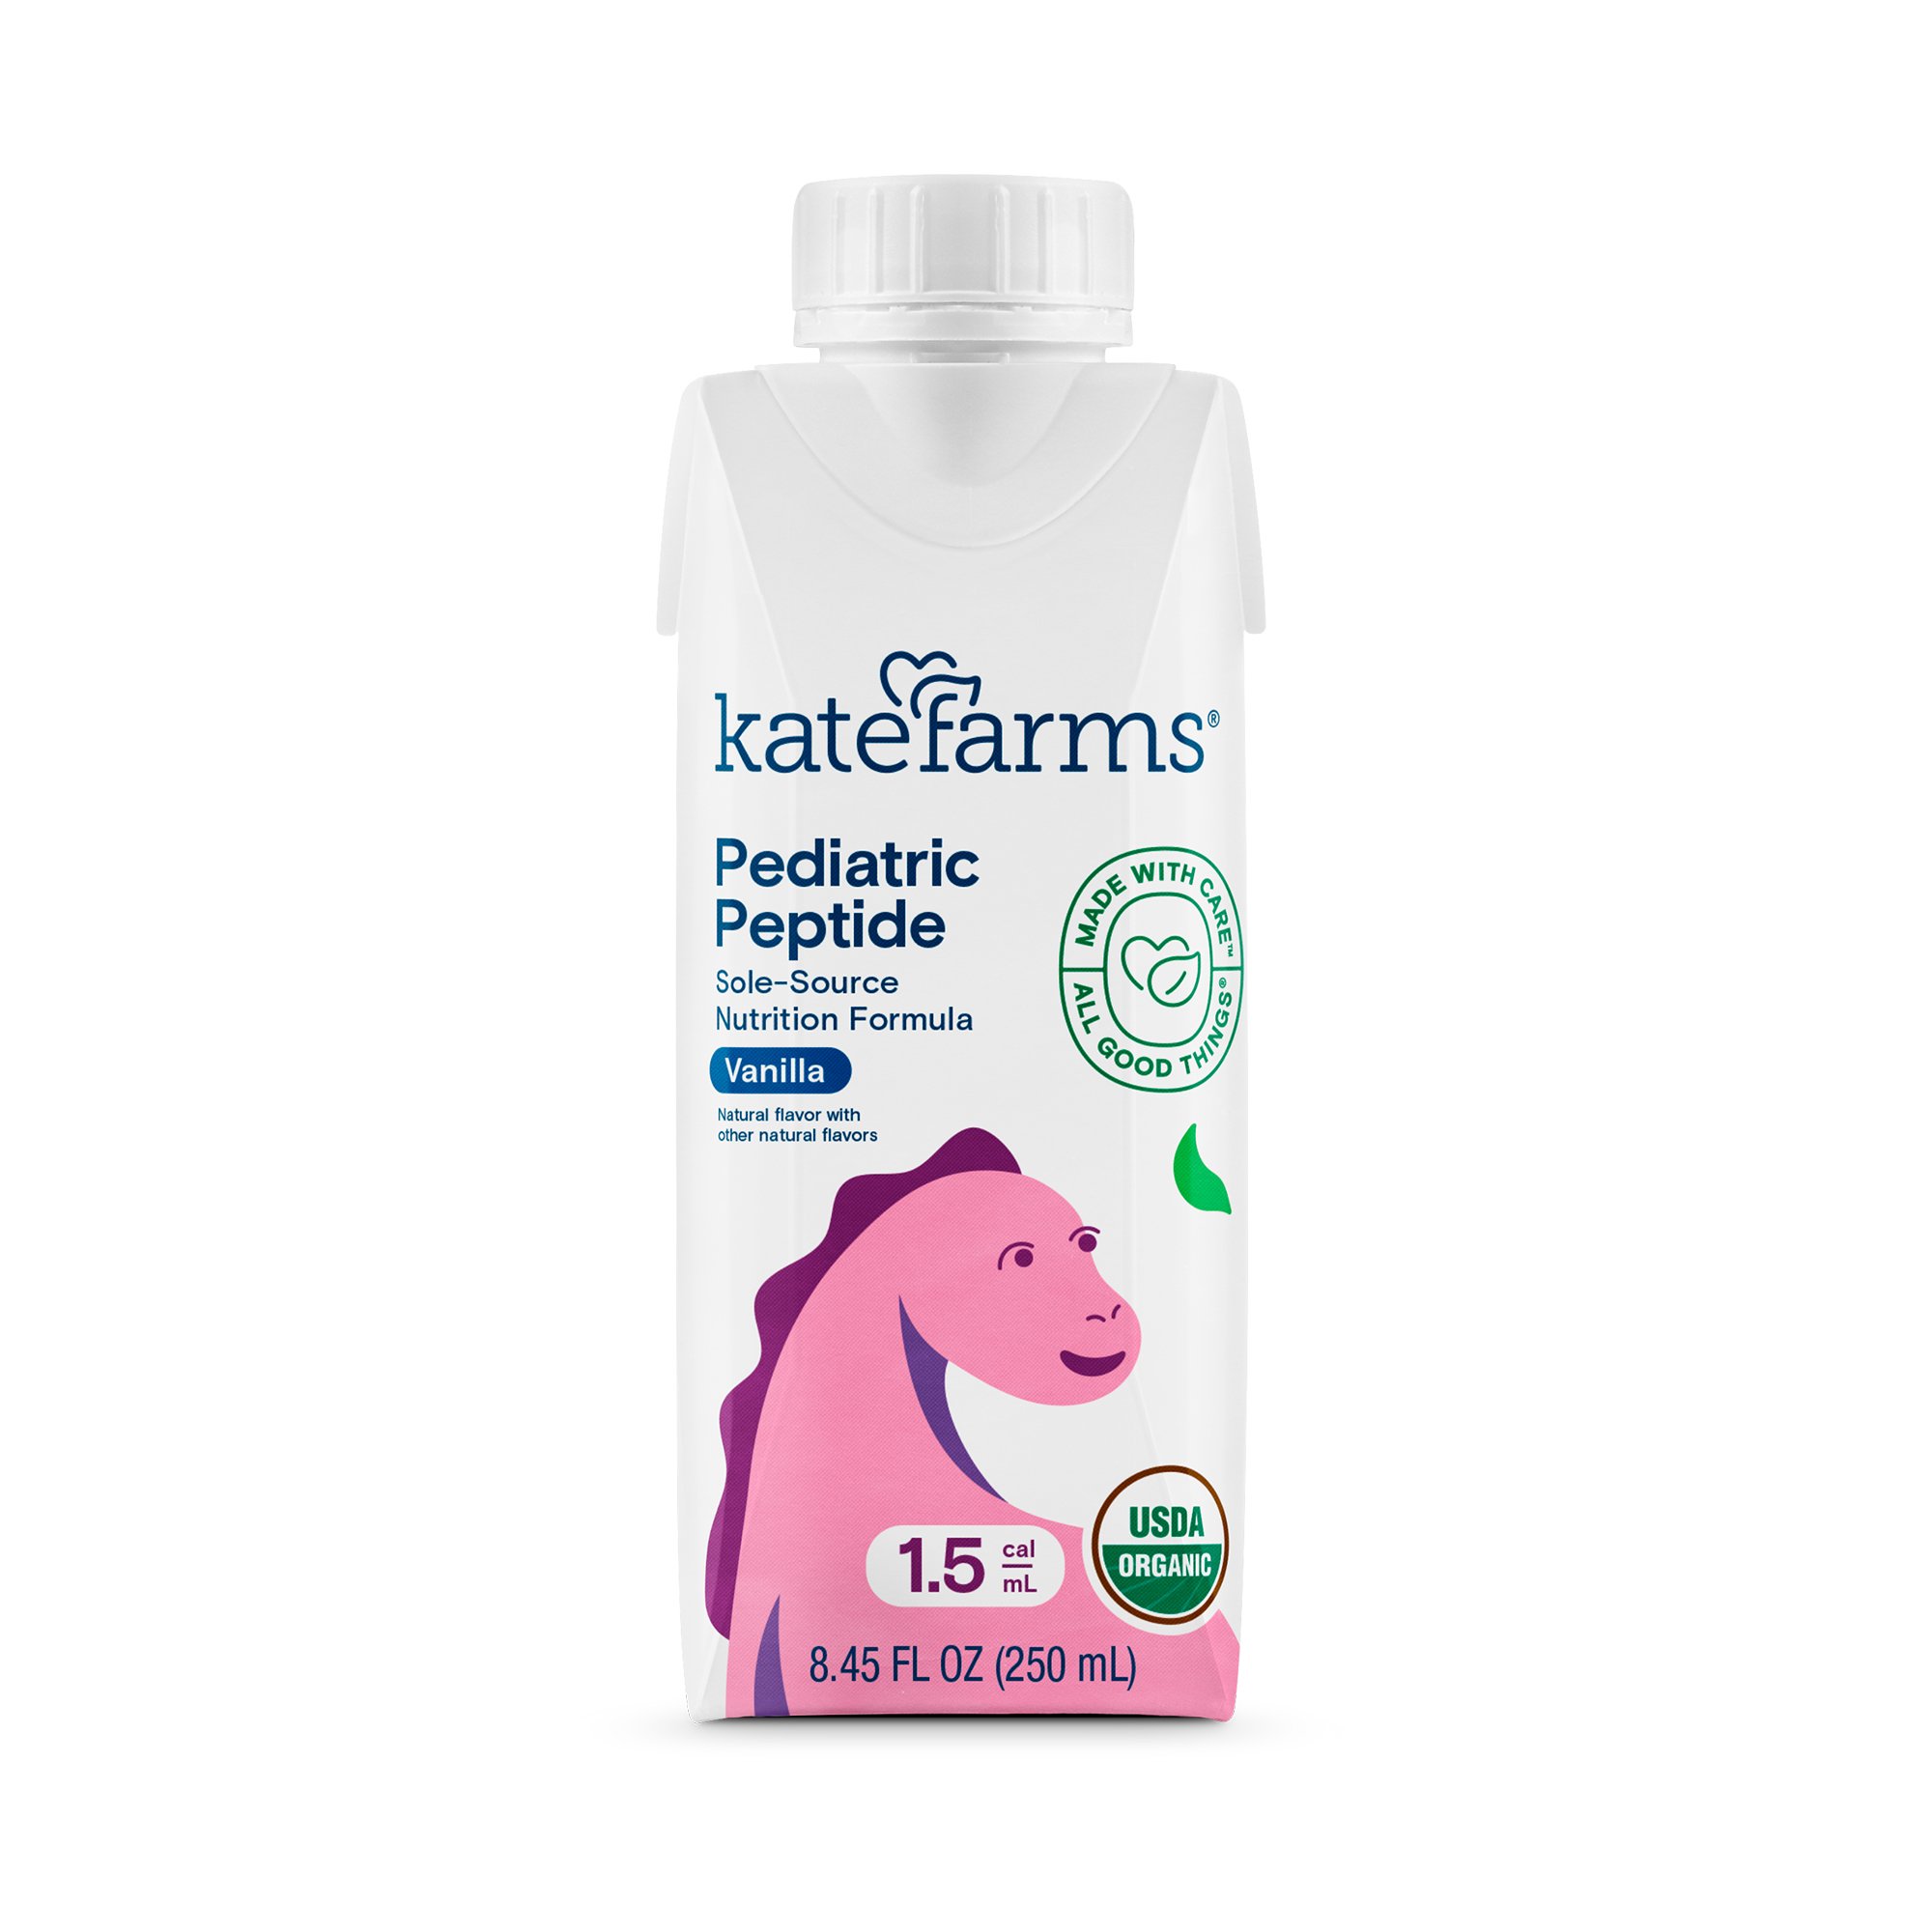 Kate Farms Pediatric Peptide 1.5 Sole-Source Nutrition Formula, Vanilla Flavor, 8.5-ounce carton MK 1105971